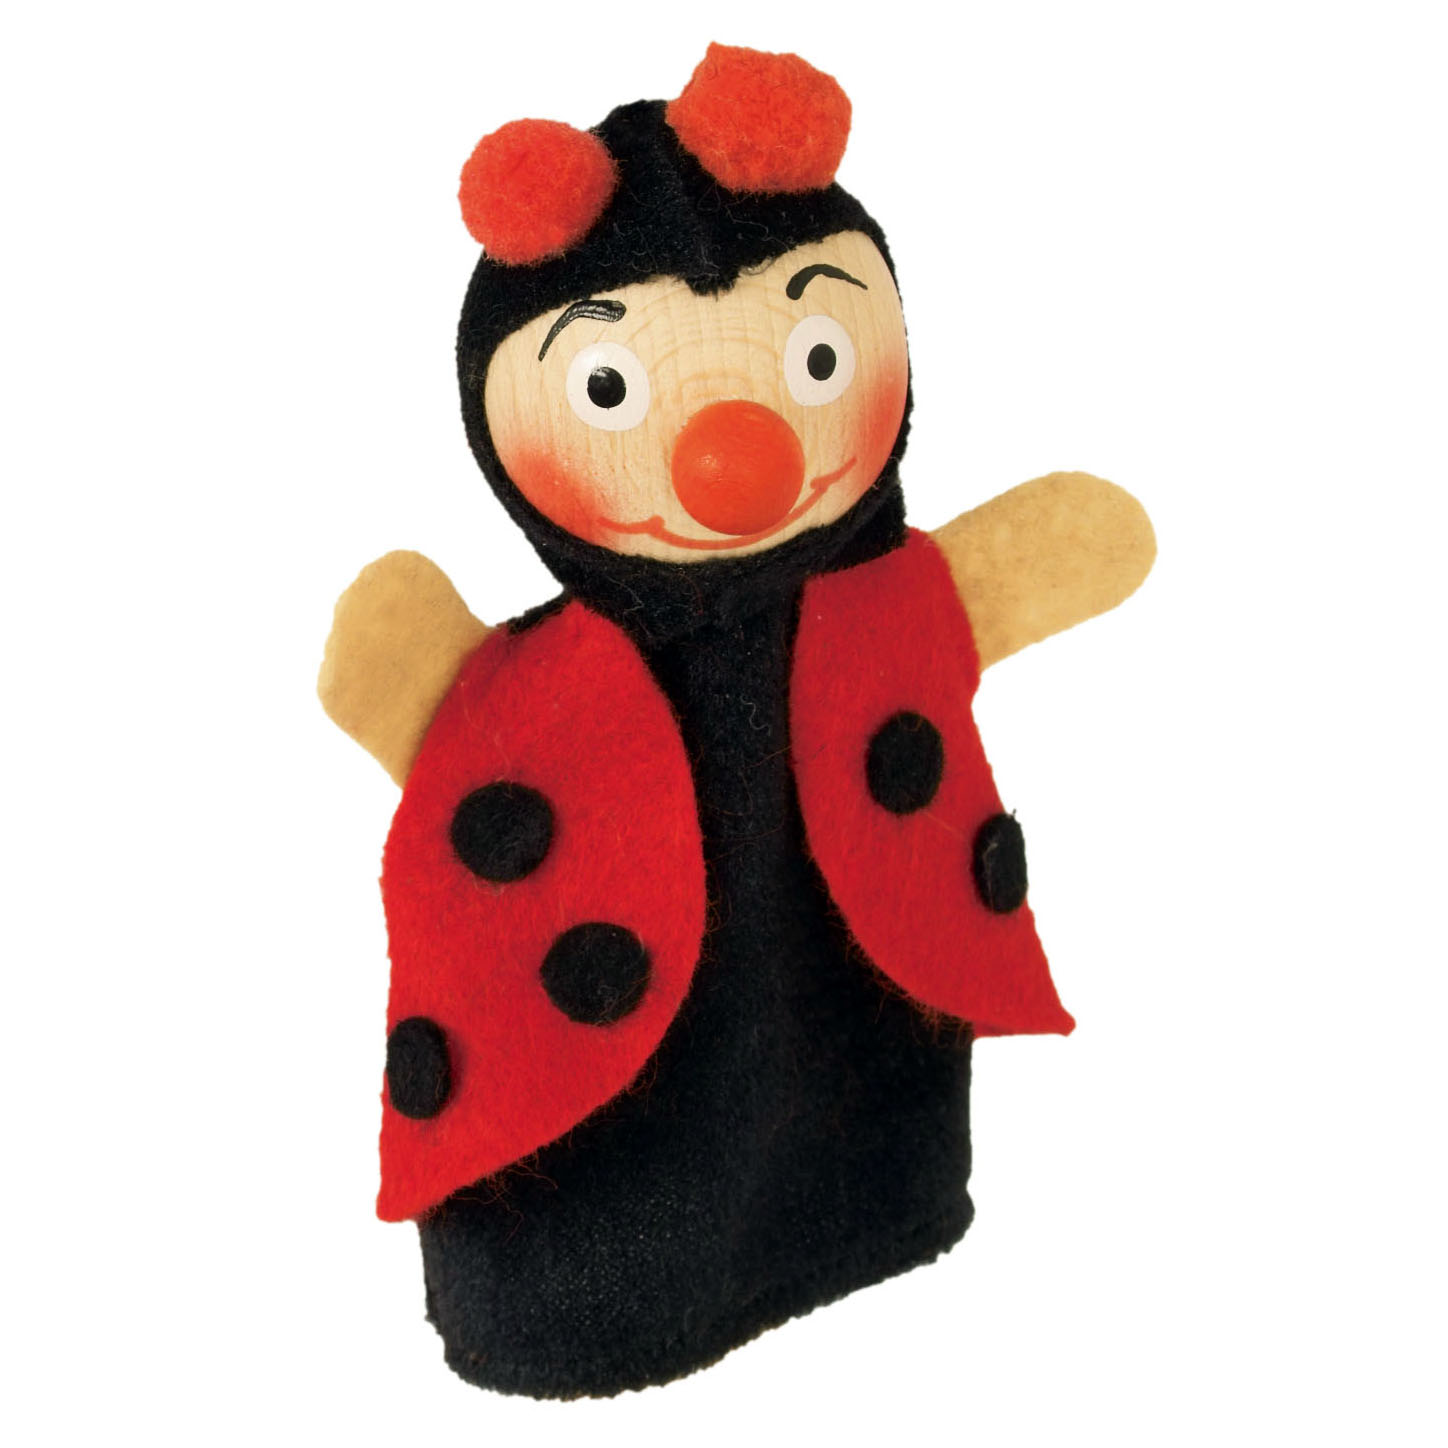 Finger puppet ladybug Charlotte - KERSA Fipu